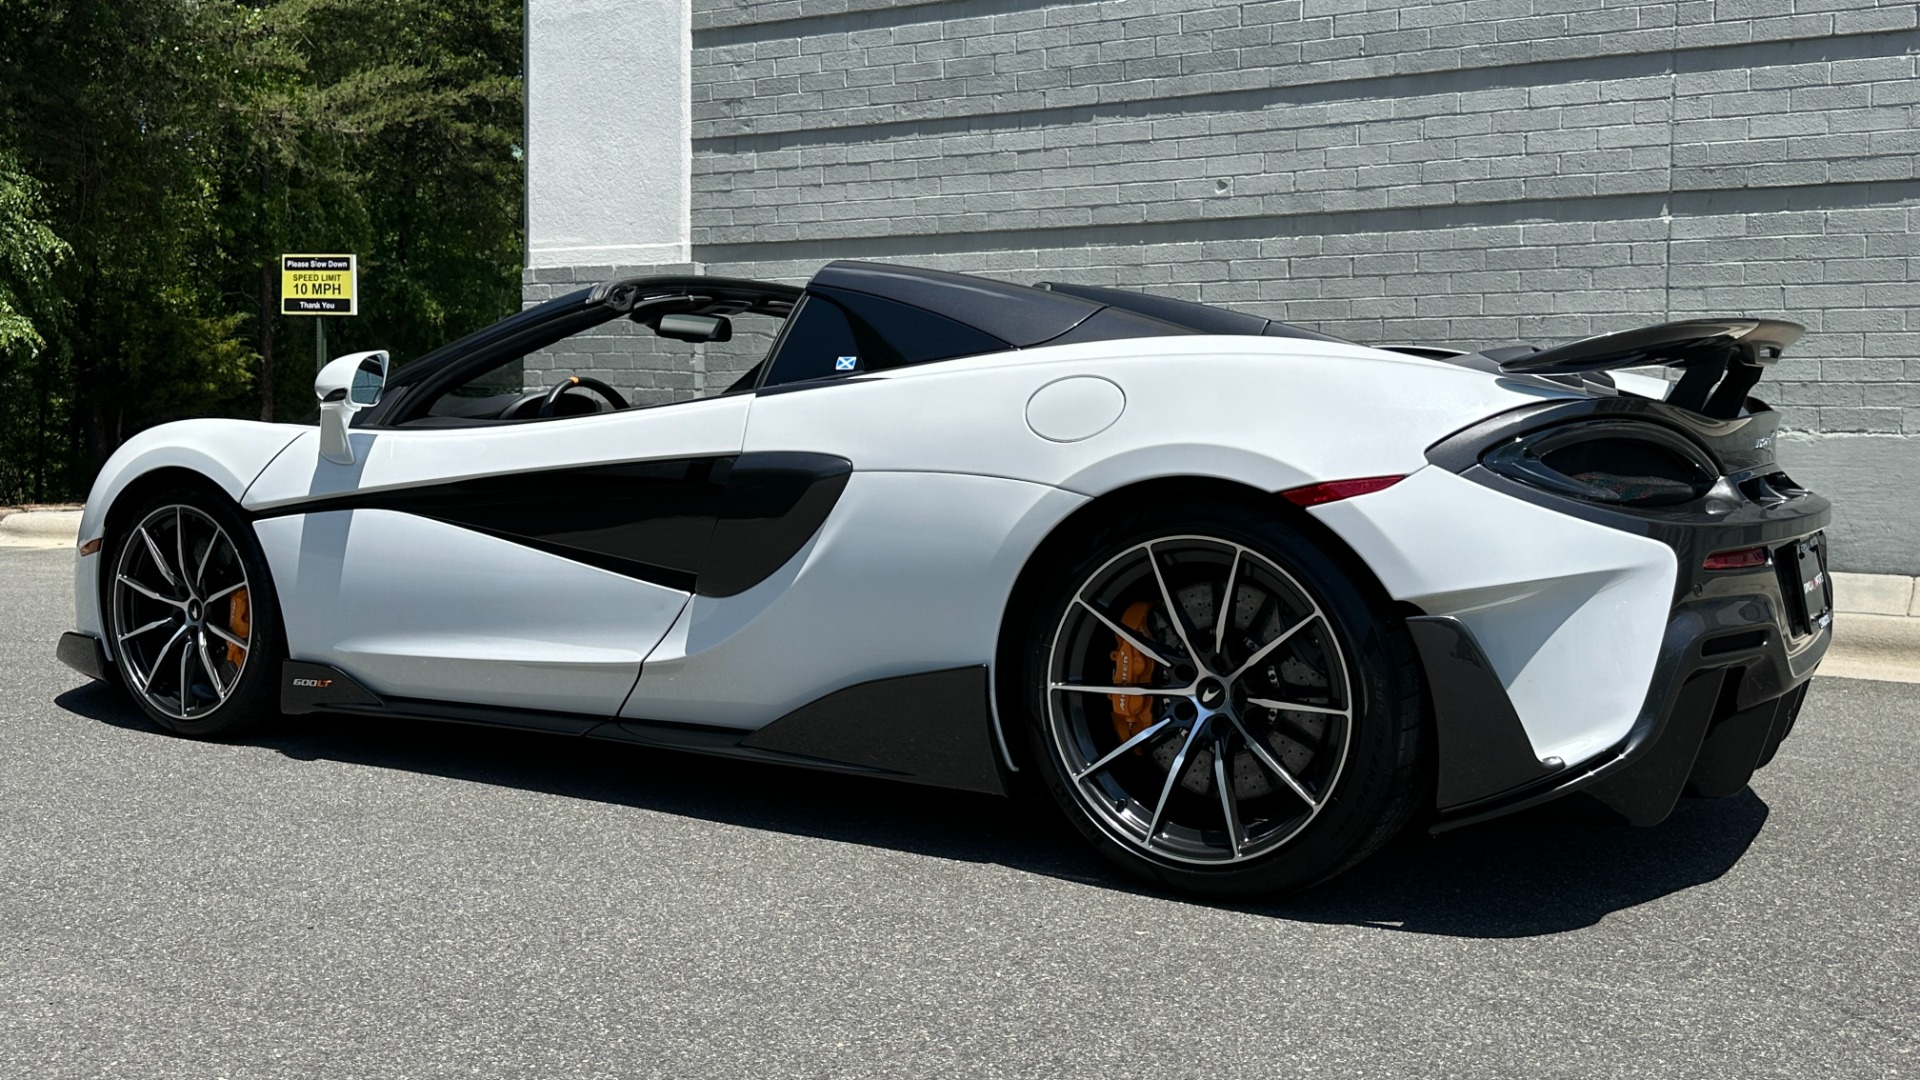 Used 2020 McLaren 600LT SPIDER / FRONT PPF / LEATHER INT / MSO BELTS / CARBON FIBER INT for sale $295,000 at Formula Imports in Charlotte NC 28227 5